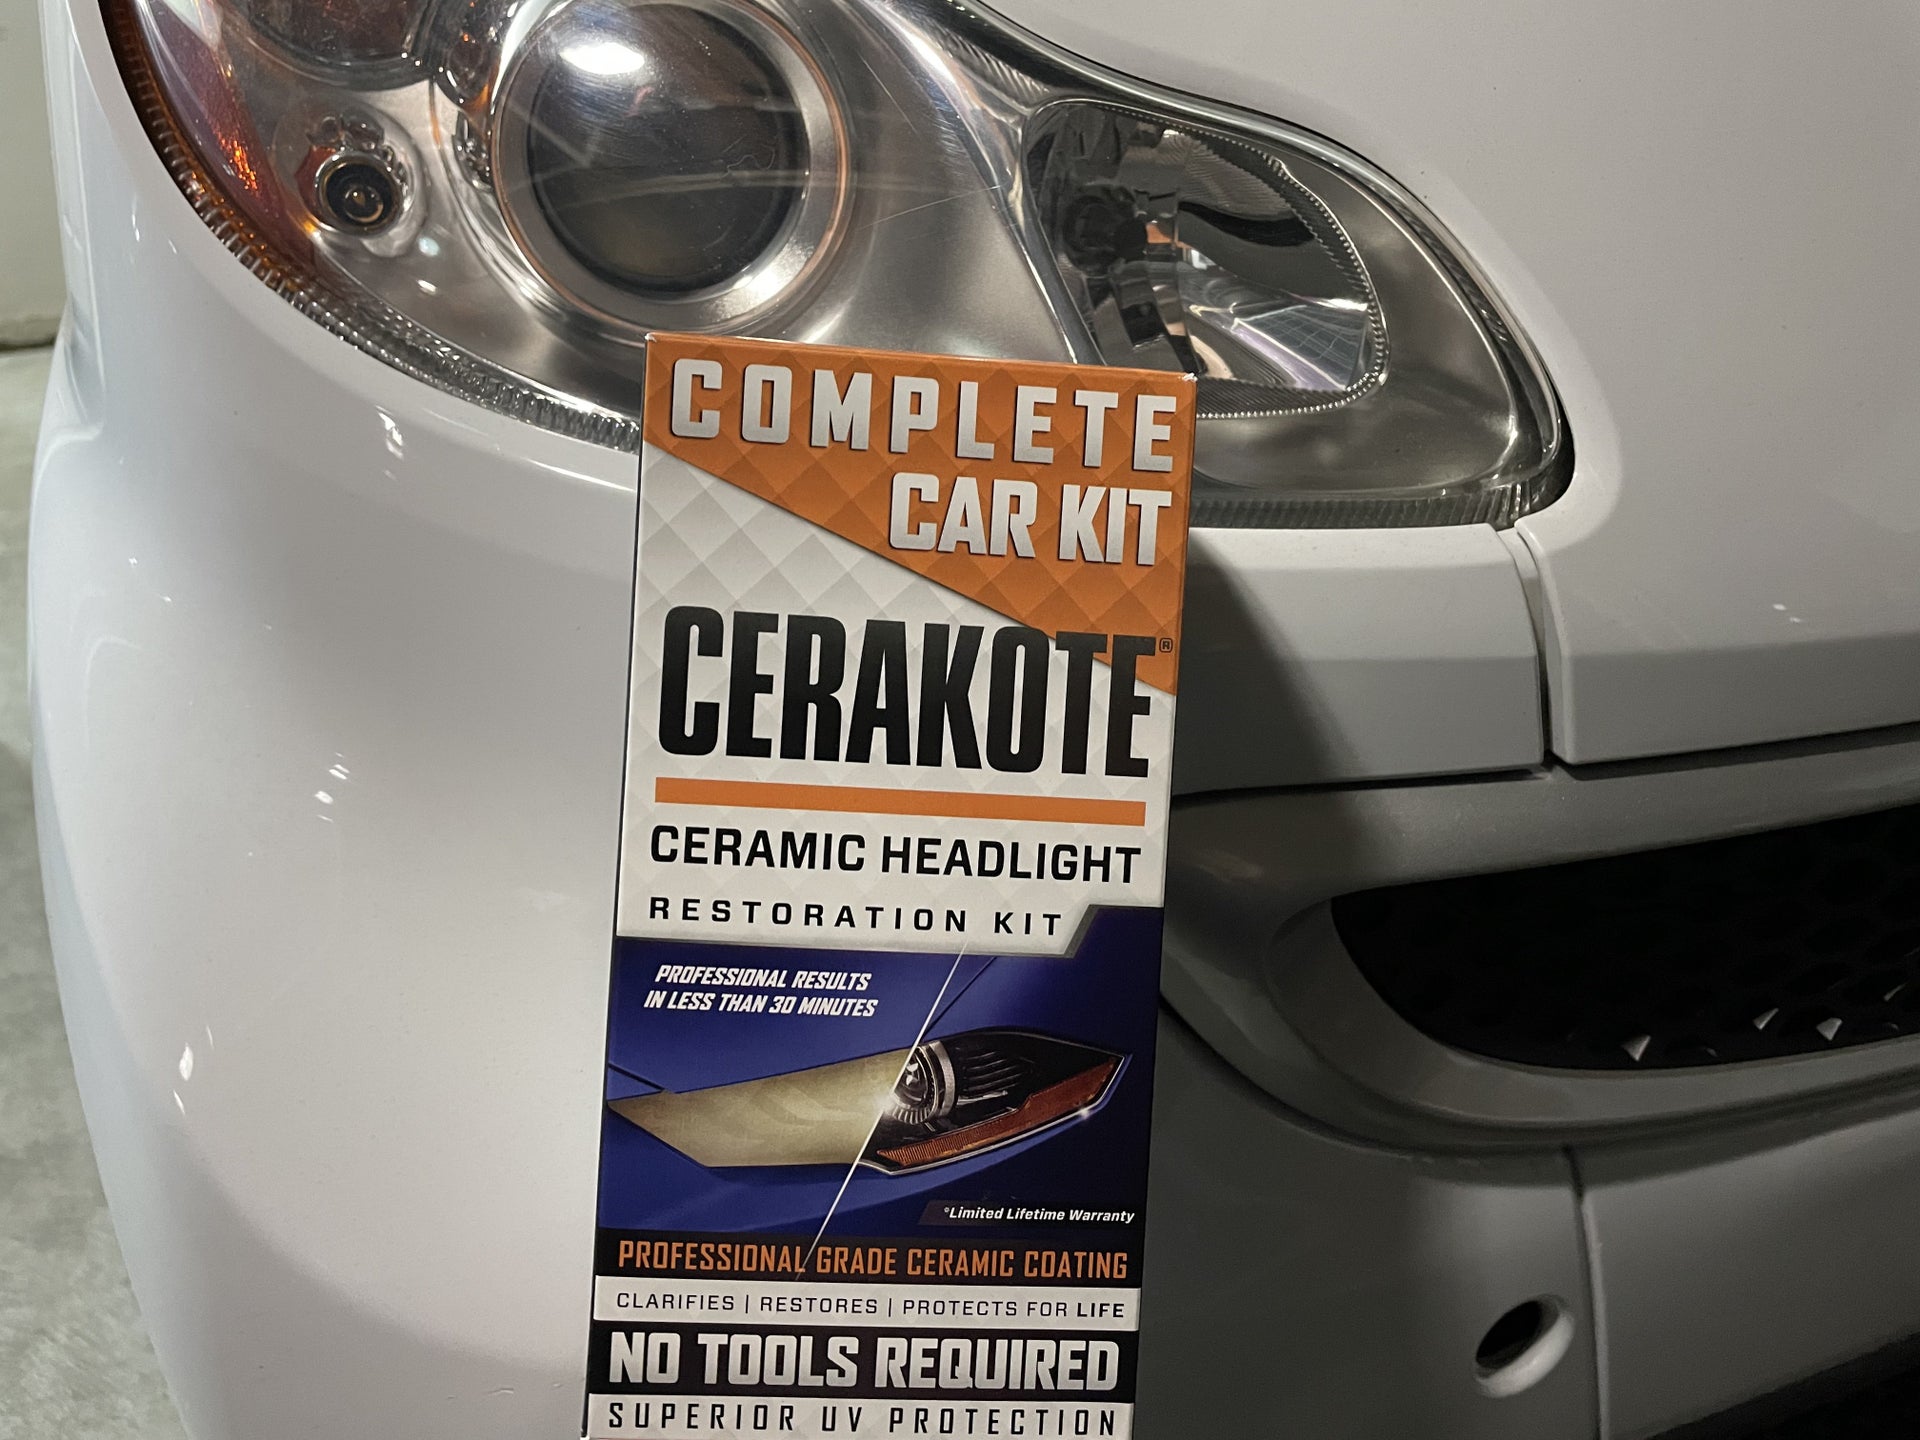 Bad luck with cerakote trim coating